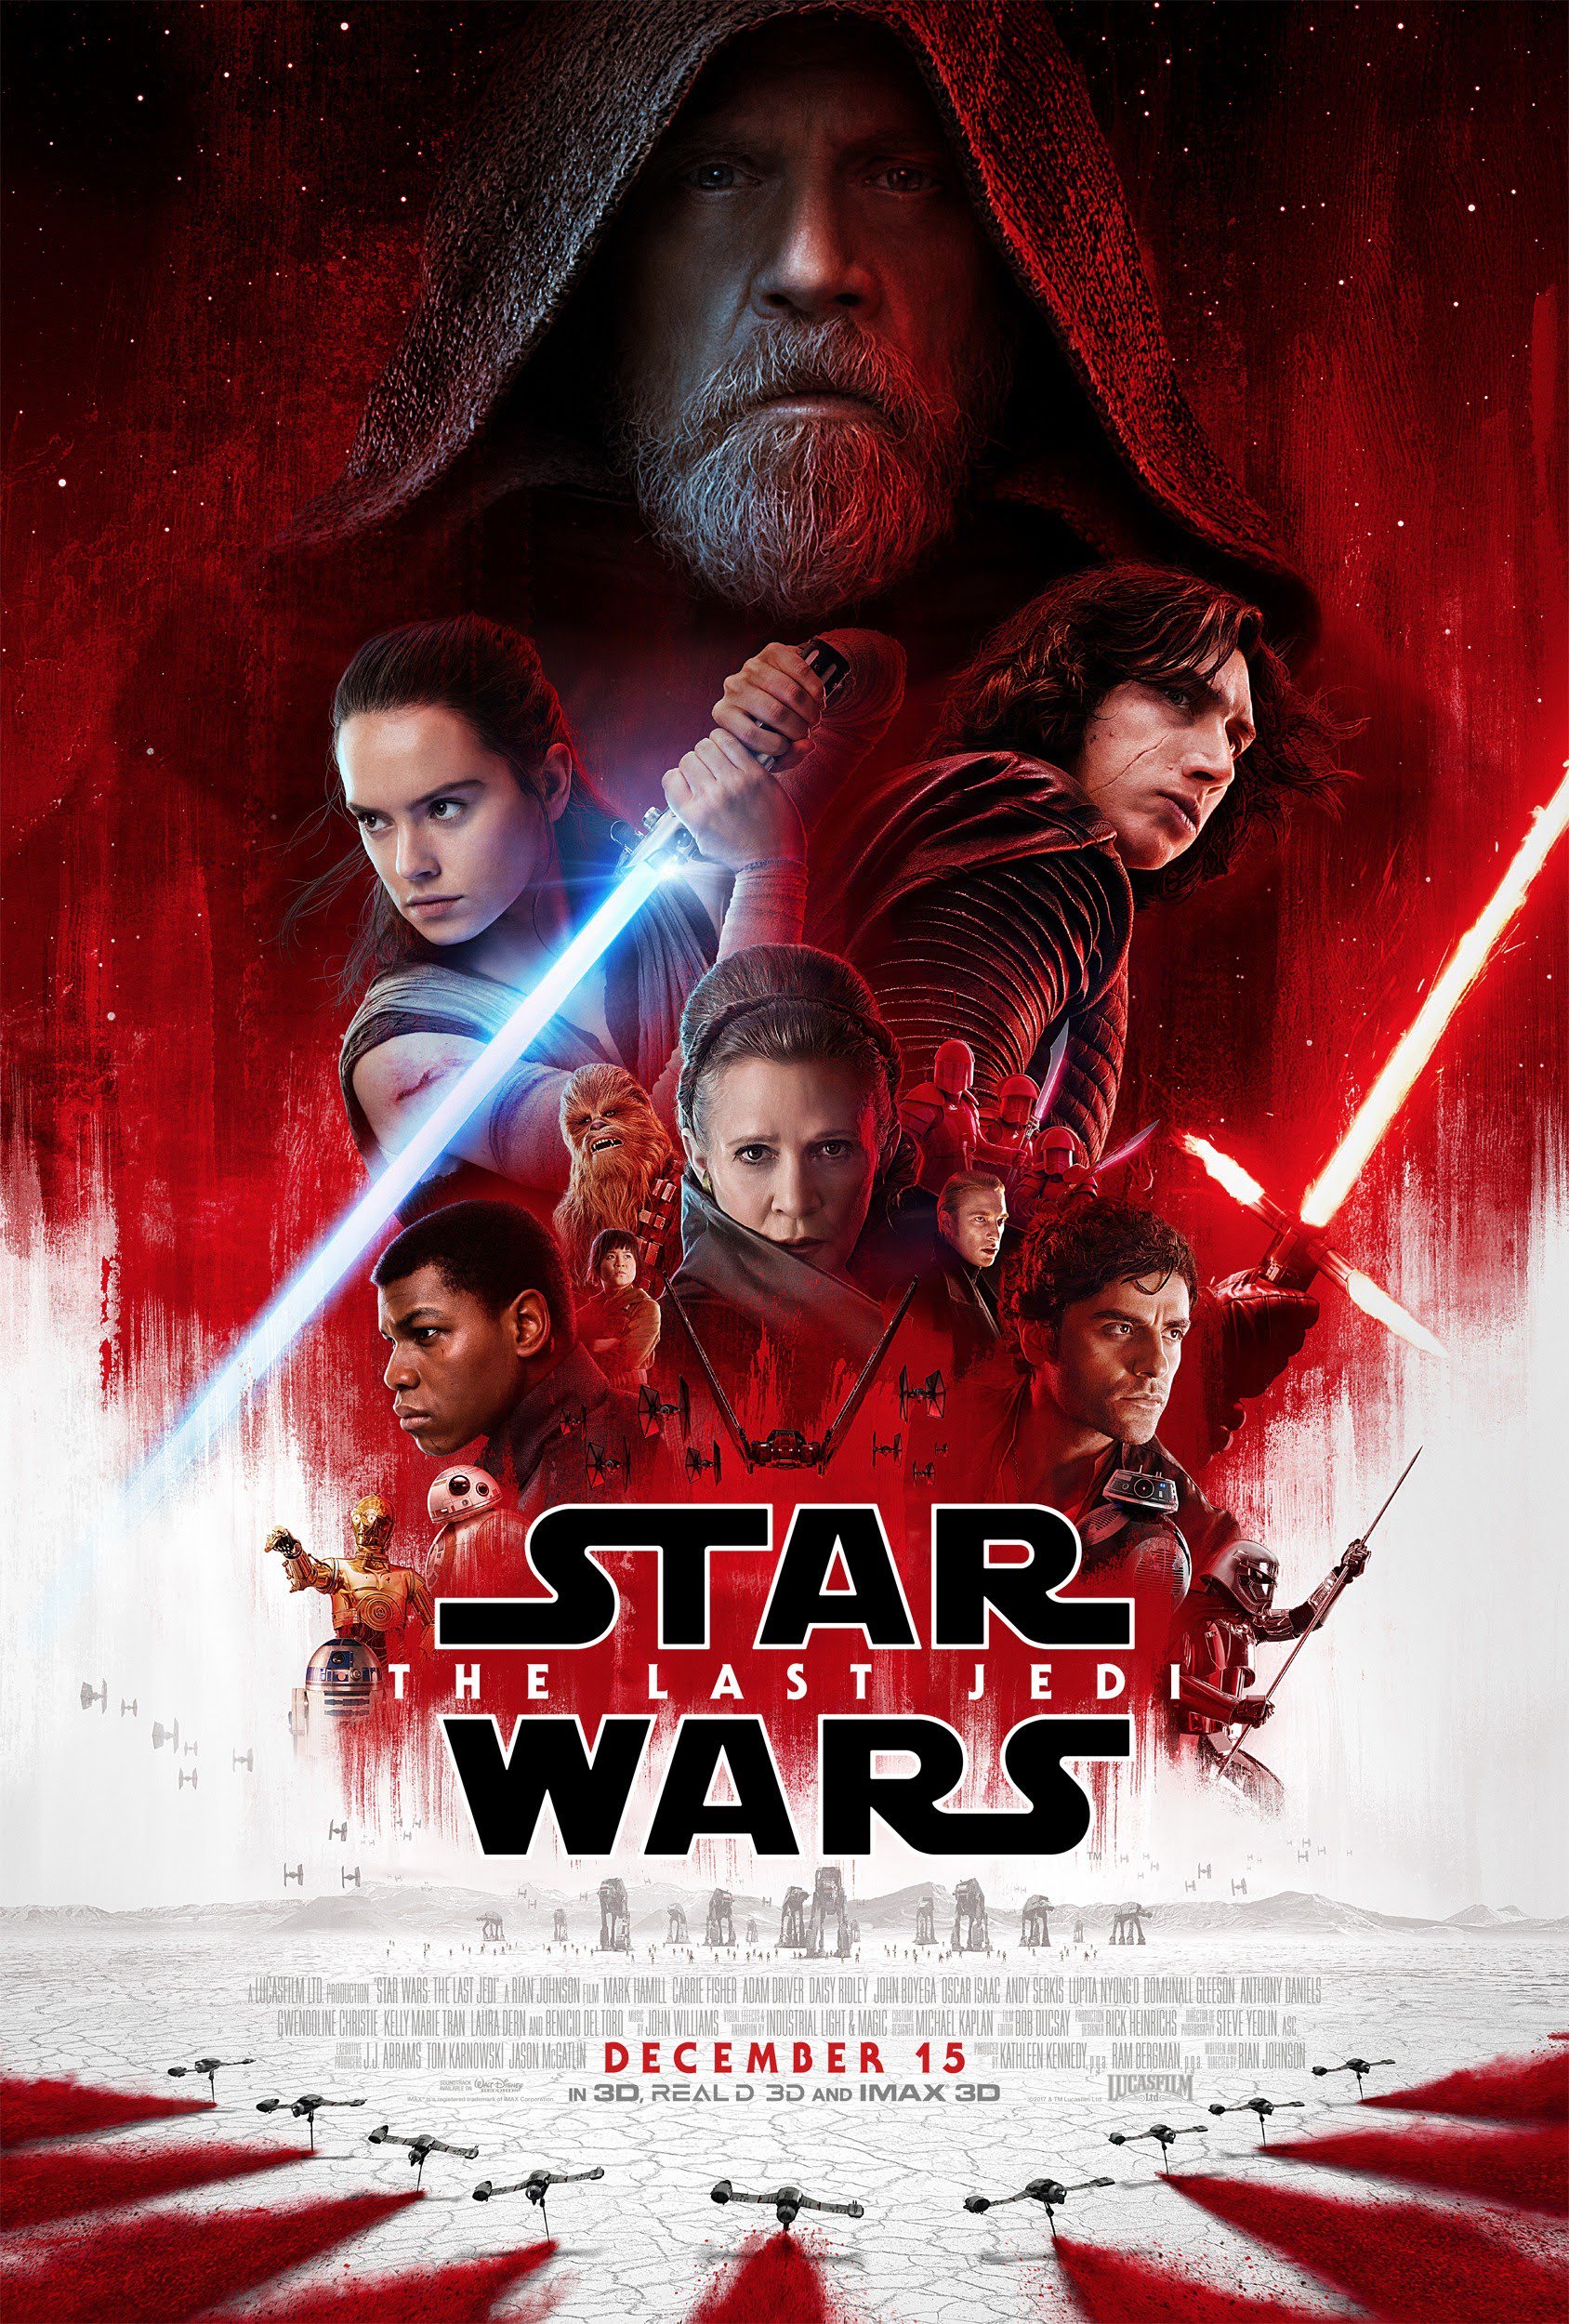 File:Star Wars- The Last Jedi Japan Premiere Red Carpet- Rian